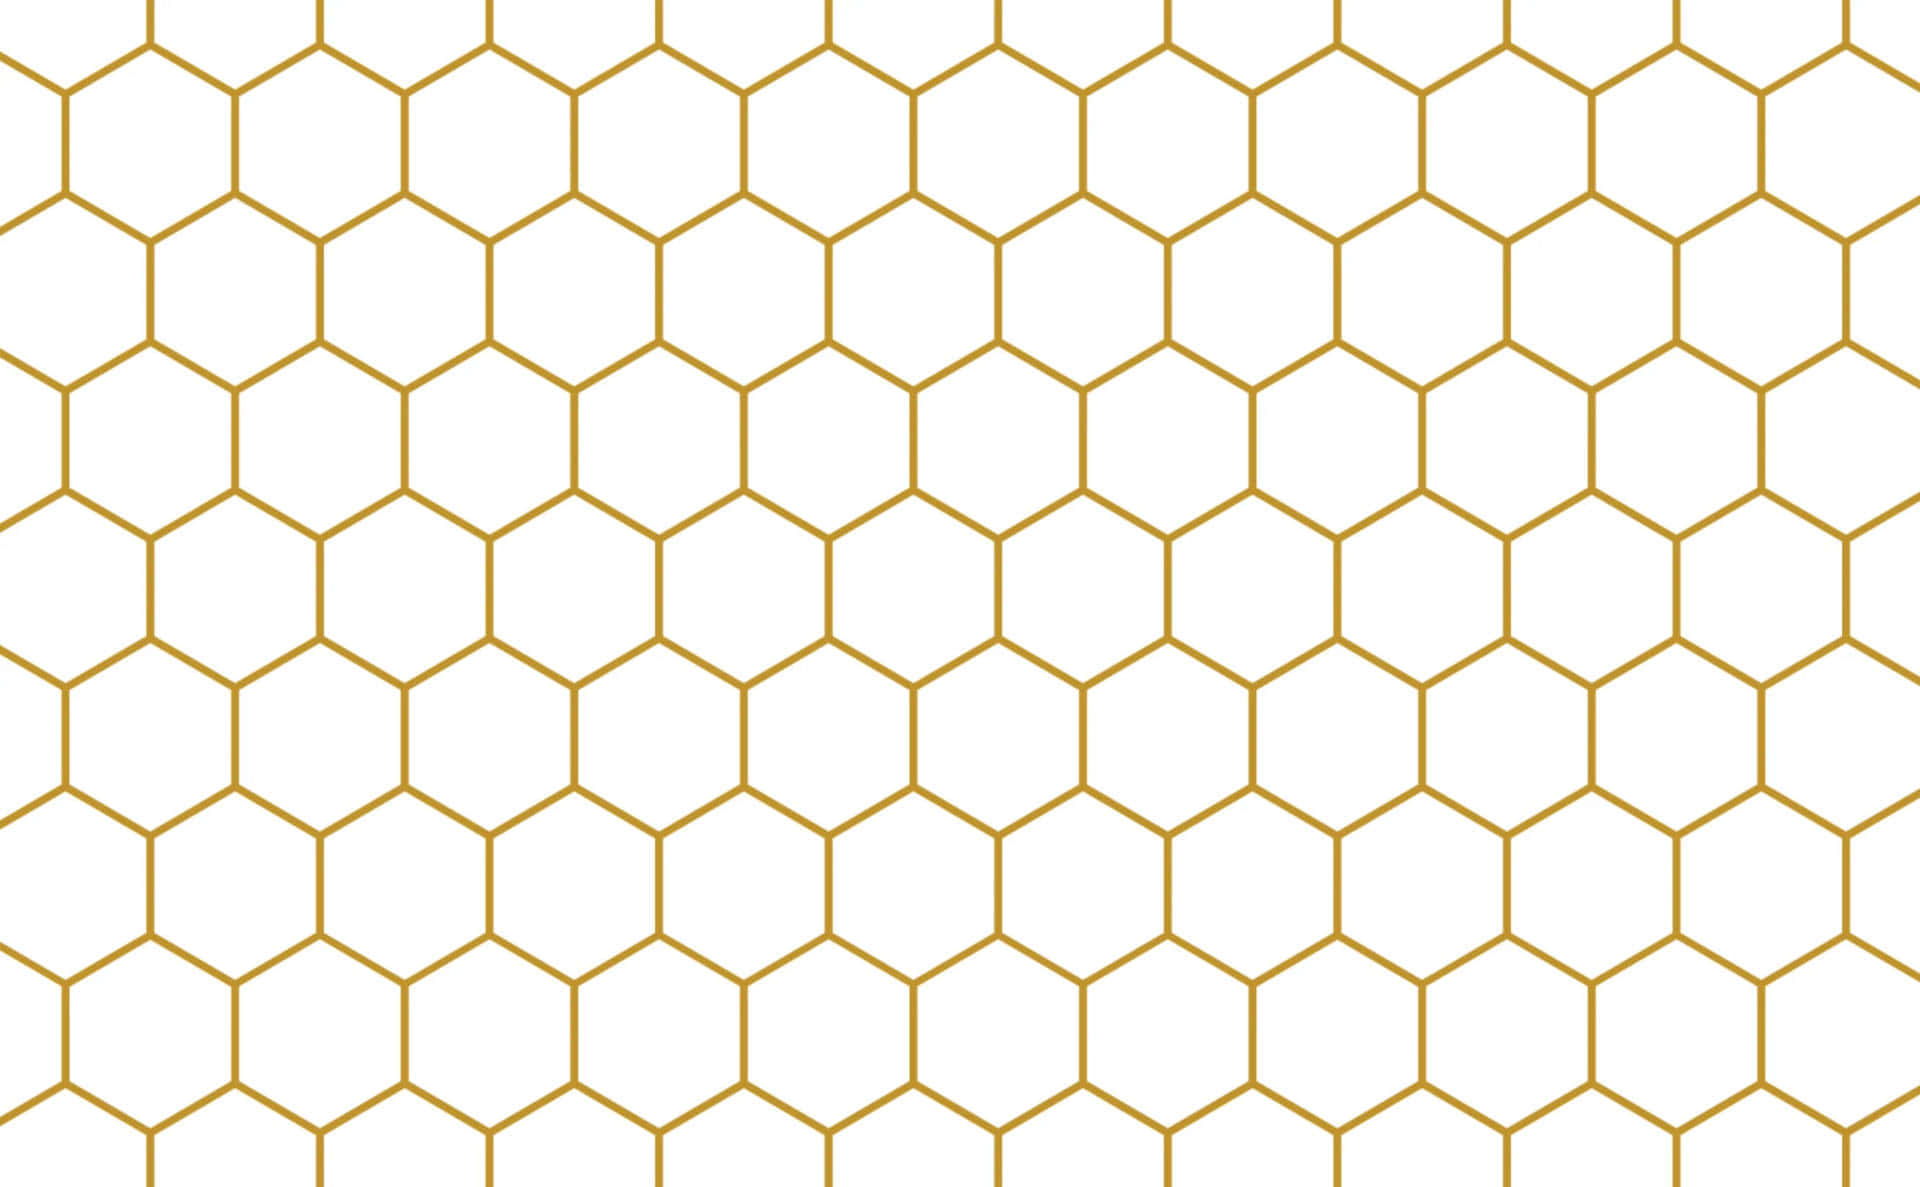 A beautiful golden honeycomb background